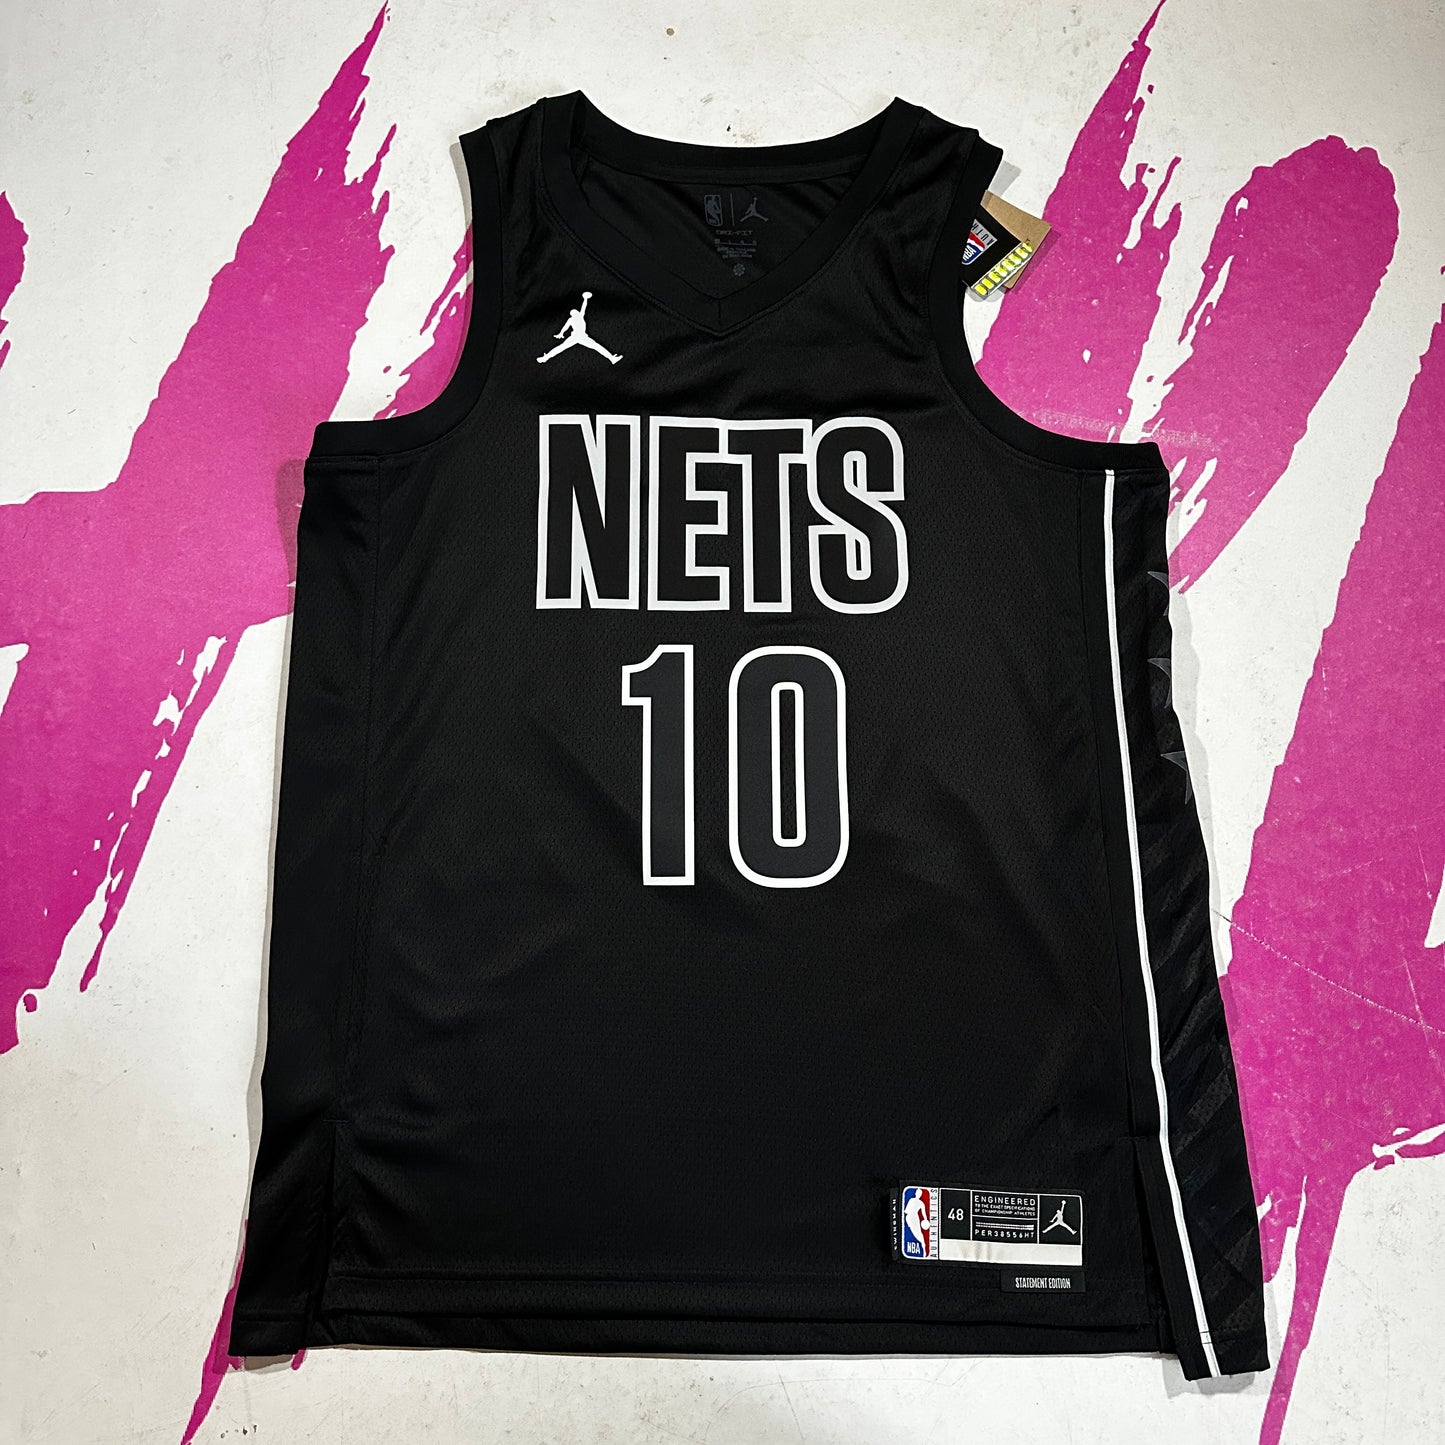 Brooklyn Nets Statement Edition Jerseys, Nets Statement Edition